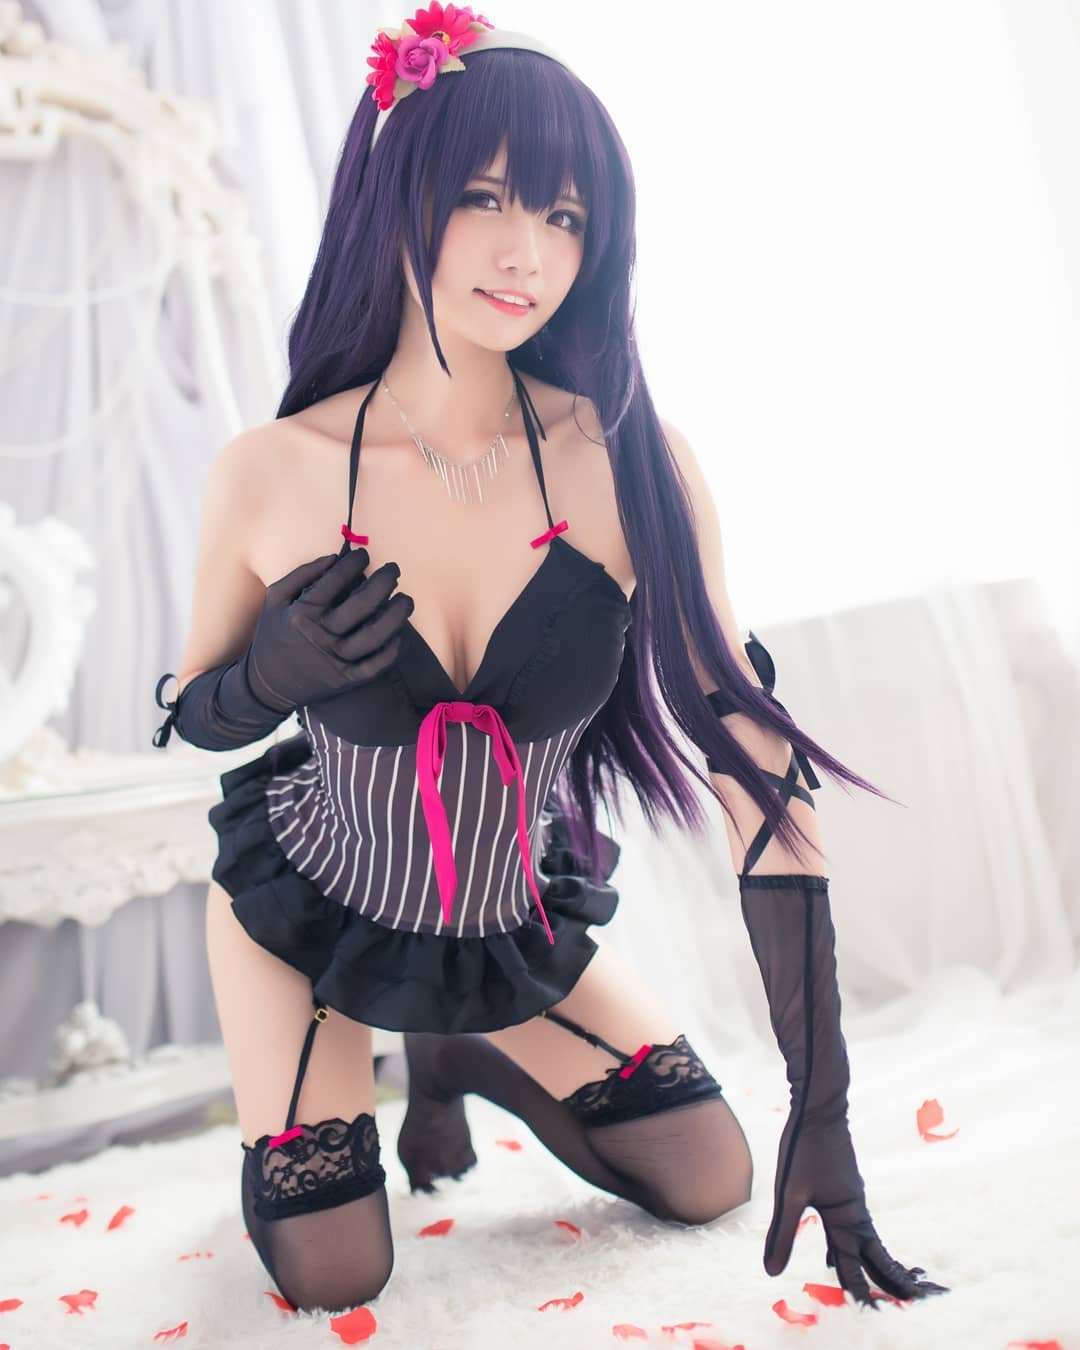  Who supports Utaha Senpai? ✨

#saekano #utahakasumigaoka  #cosplay #japan #anime #photoshoot #taiwan #photography #lingerie #sexy